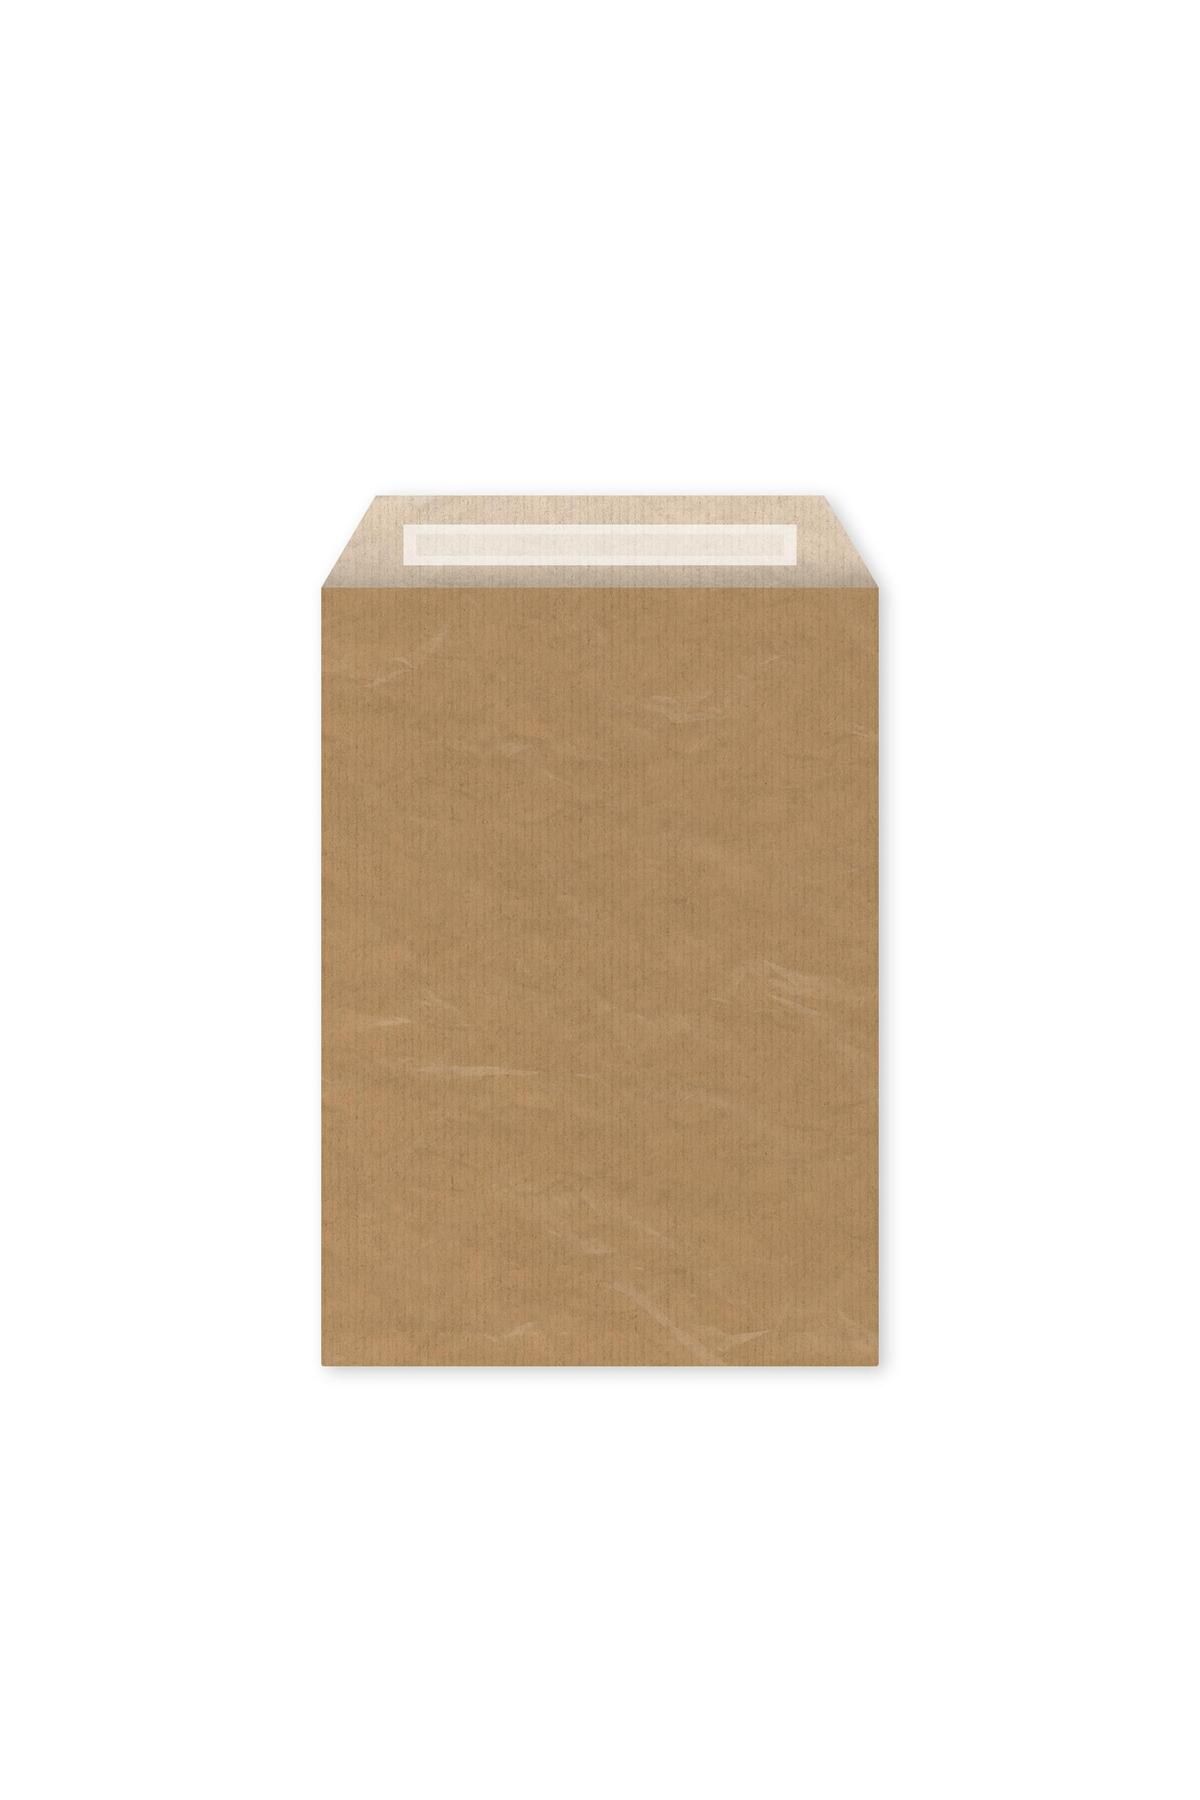 Roll Up Bantlı Hediye Paketi Kağıt Altın Sarısı 25x6x30,5 cm - 25 Adet